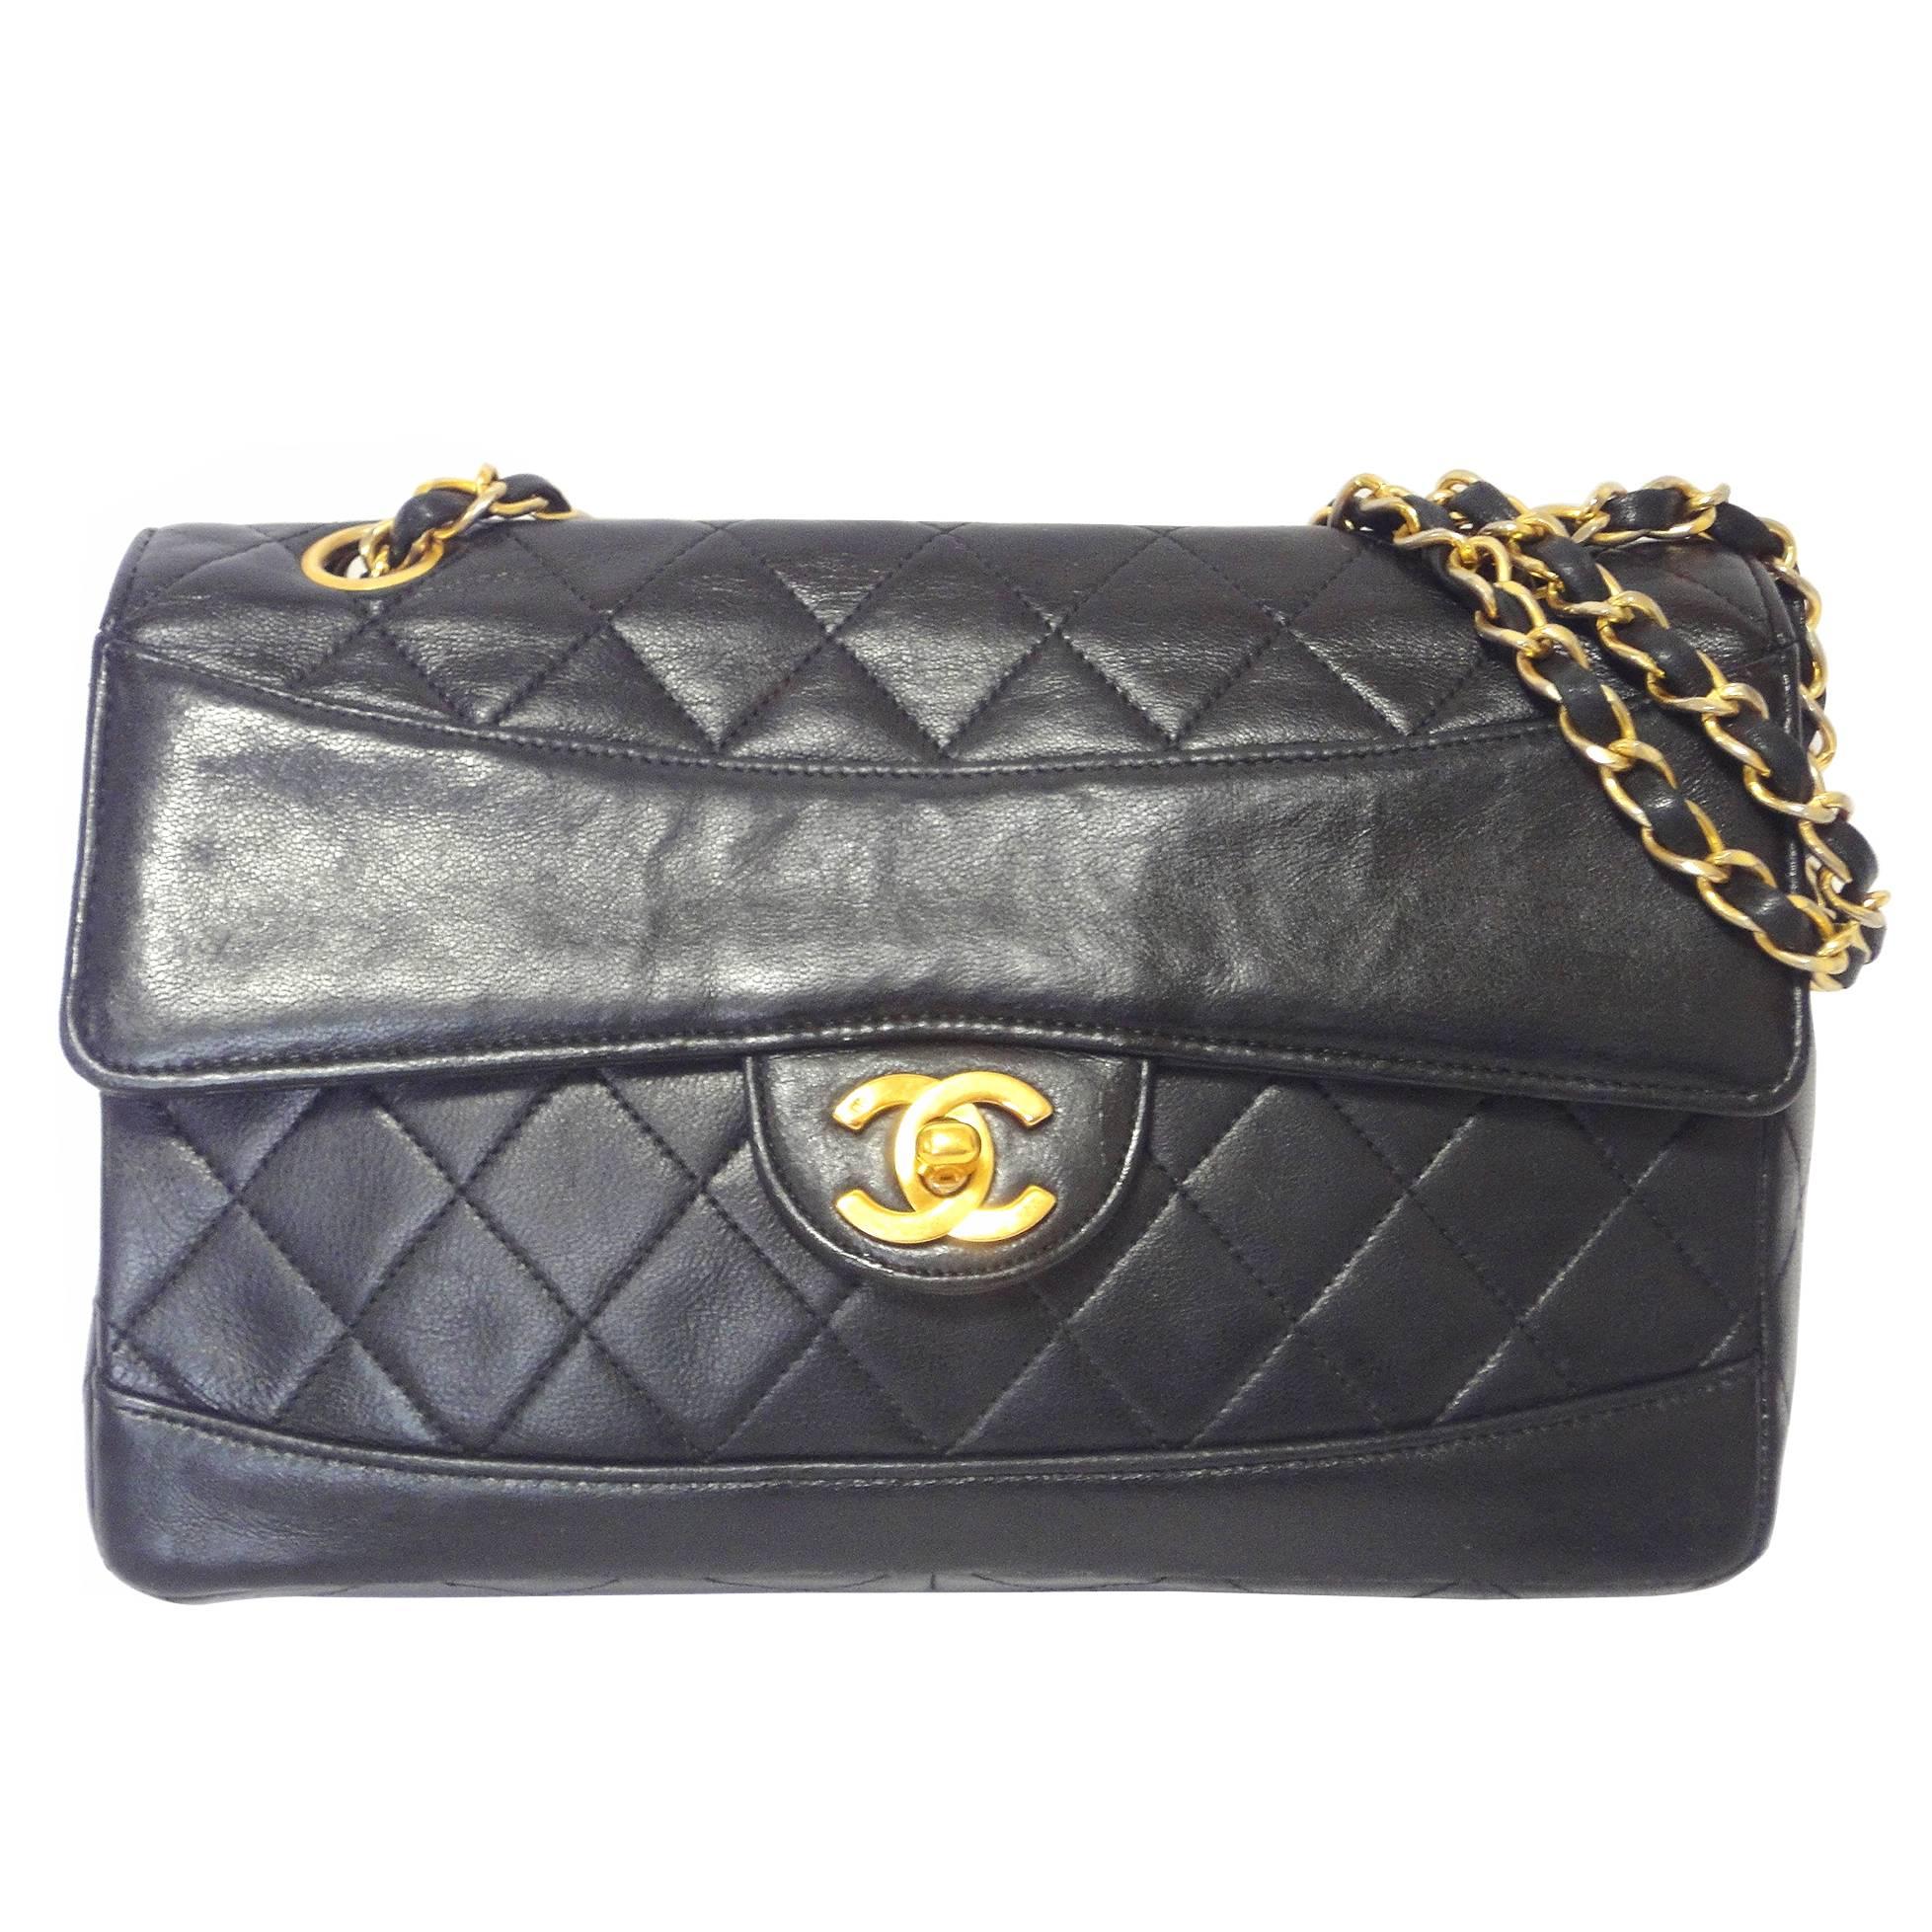 Vintage Chanel classic 2.55 black lambskin shoulder bag with golden chain straps